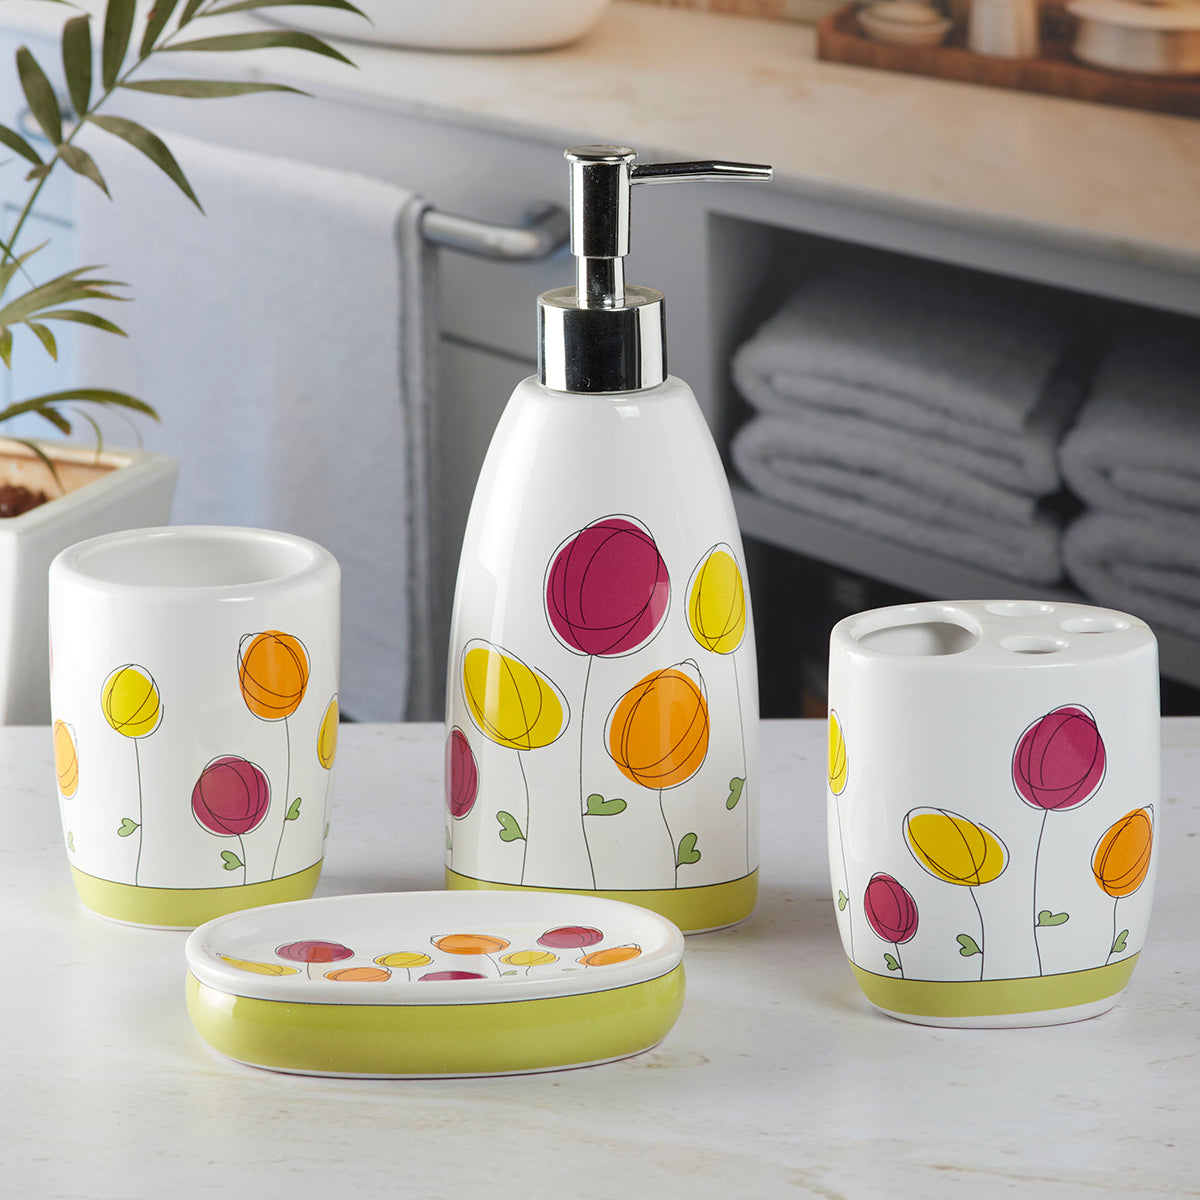 Ceramic Bathroom Set of 4 with Soap Dispenser (9880)